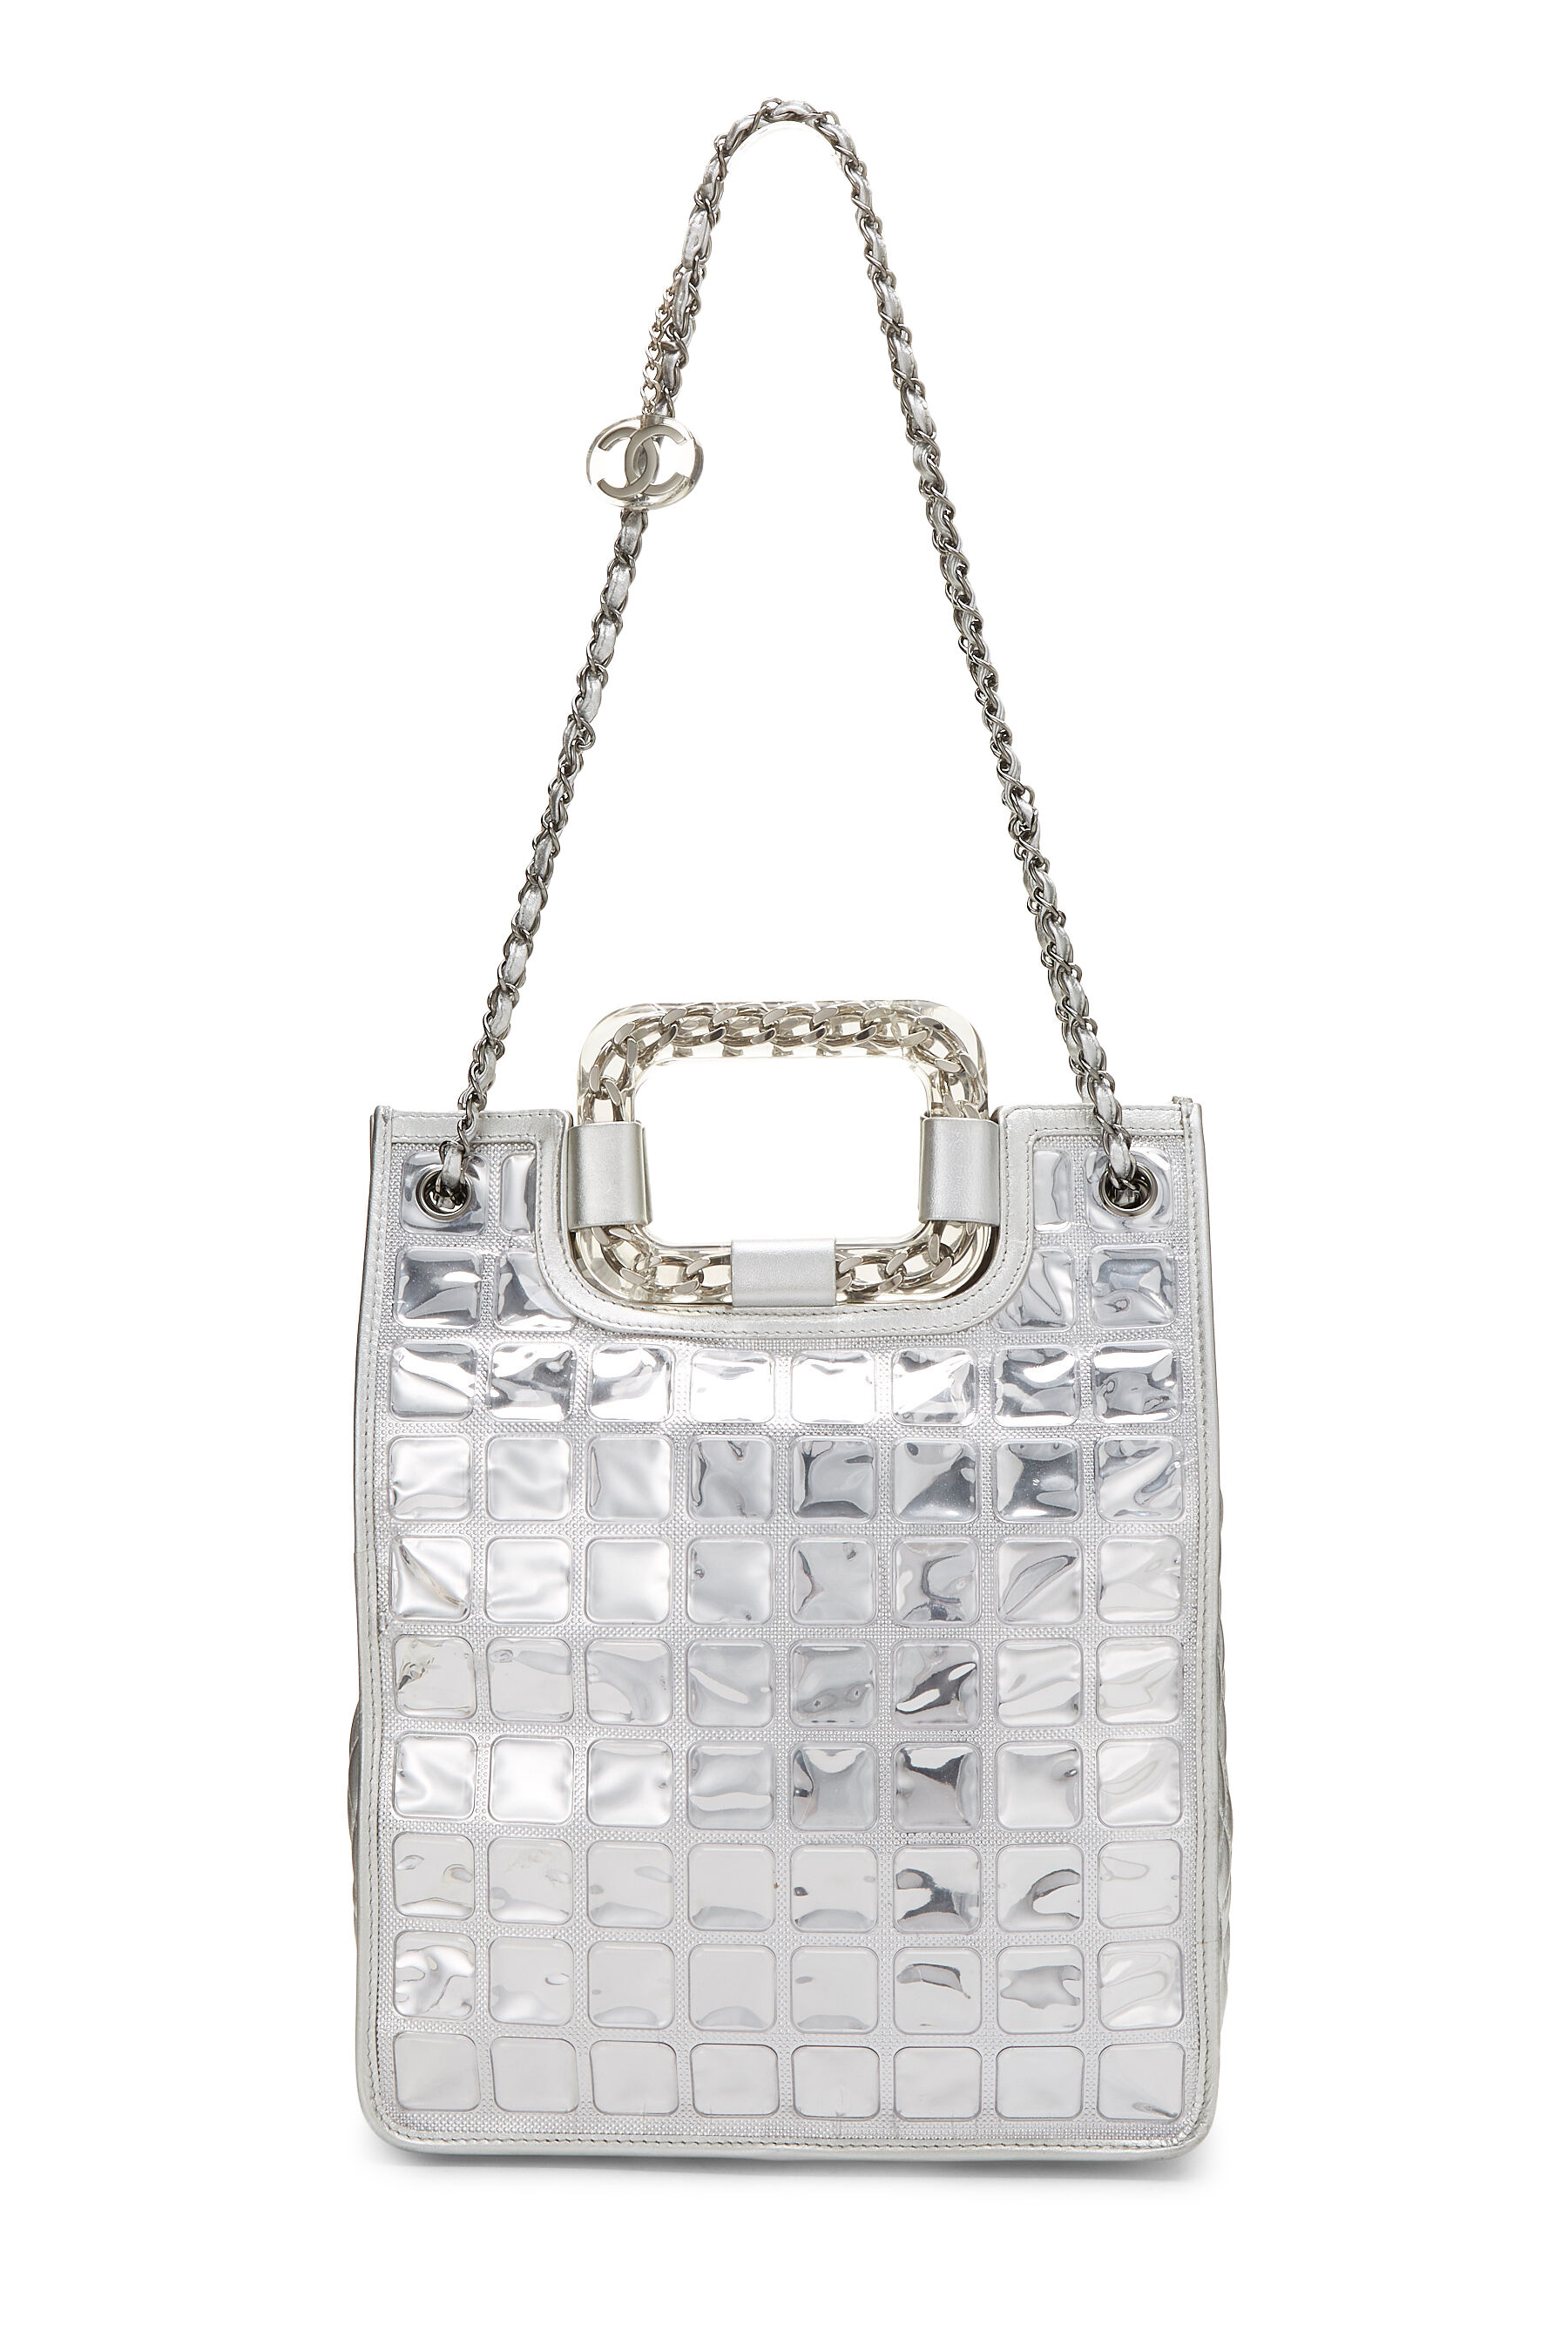 Chanel Ice Cube Bag - Silver Evening Bags, Handbags - CHA06155